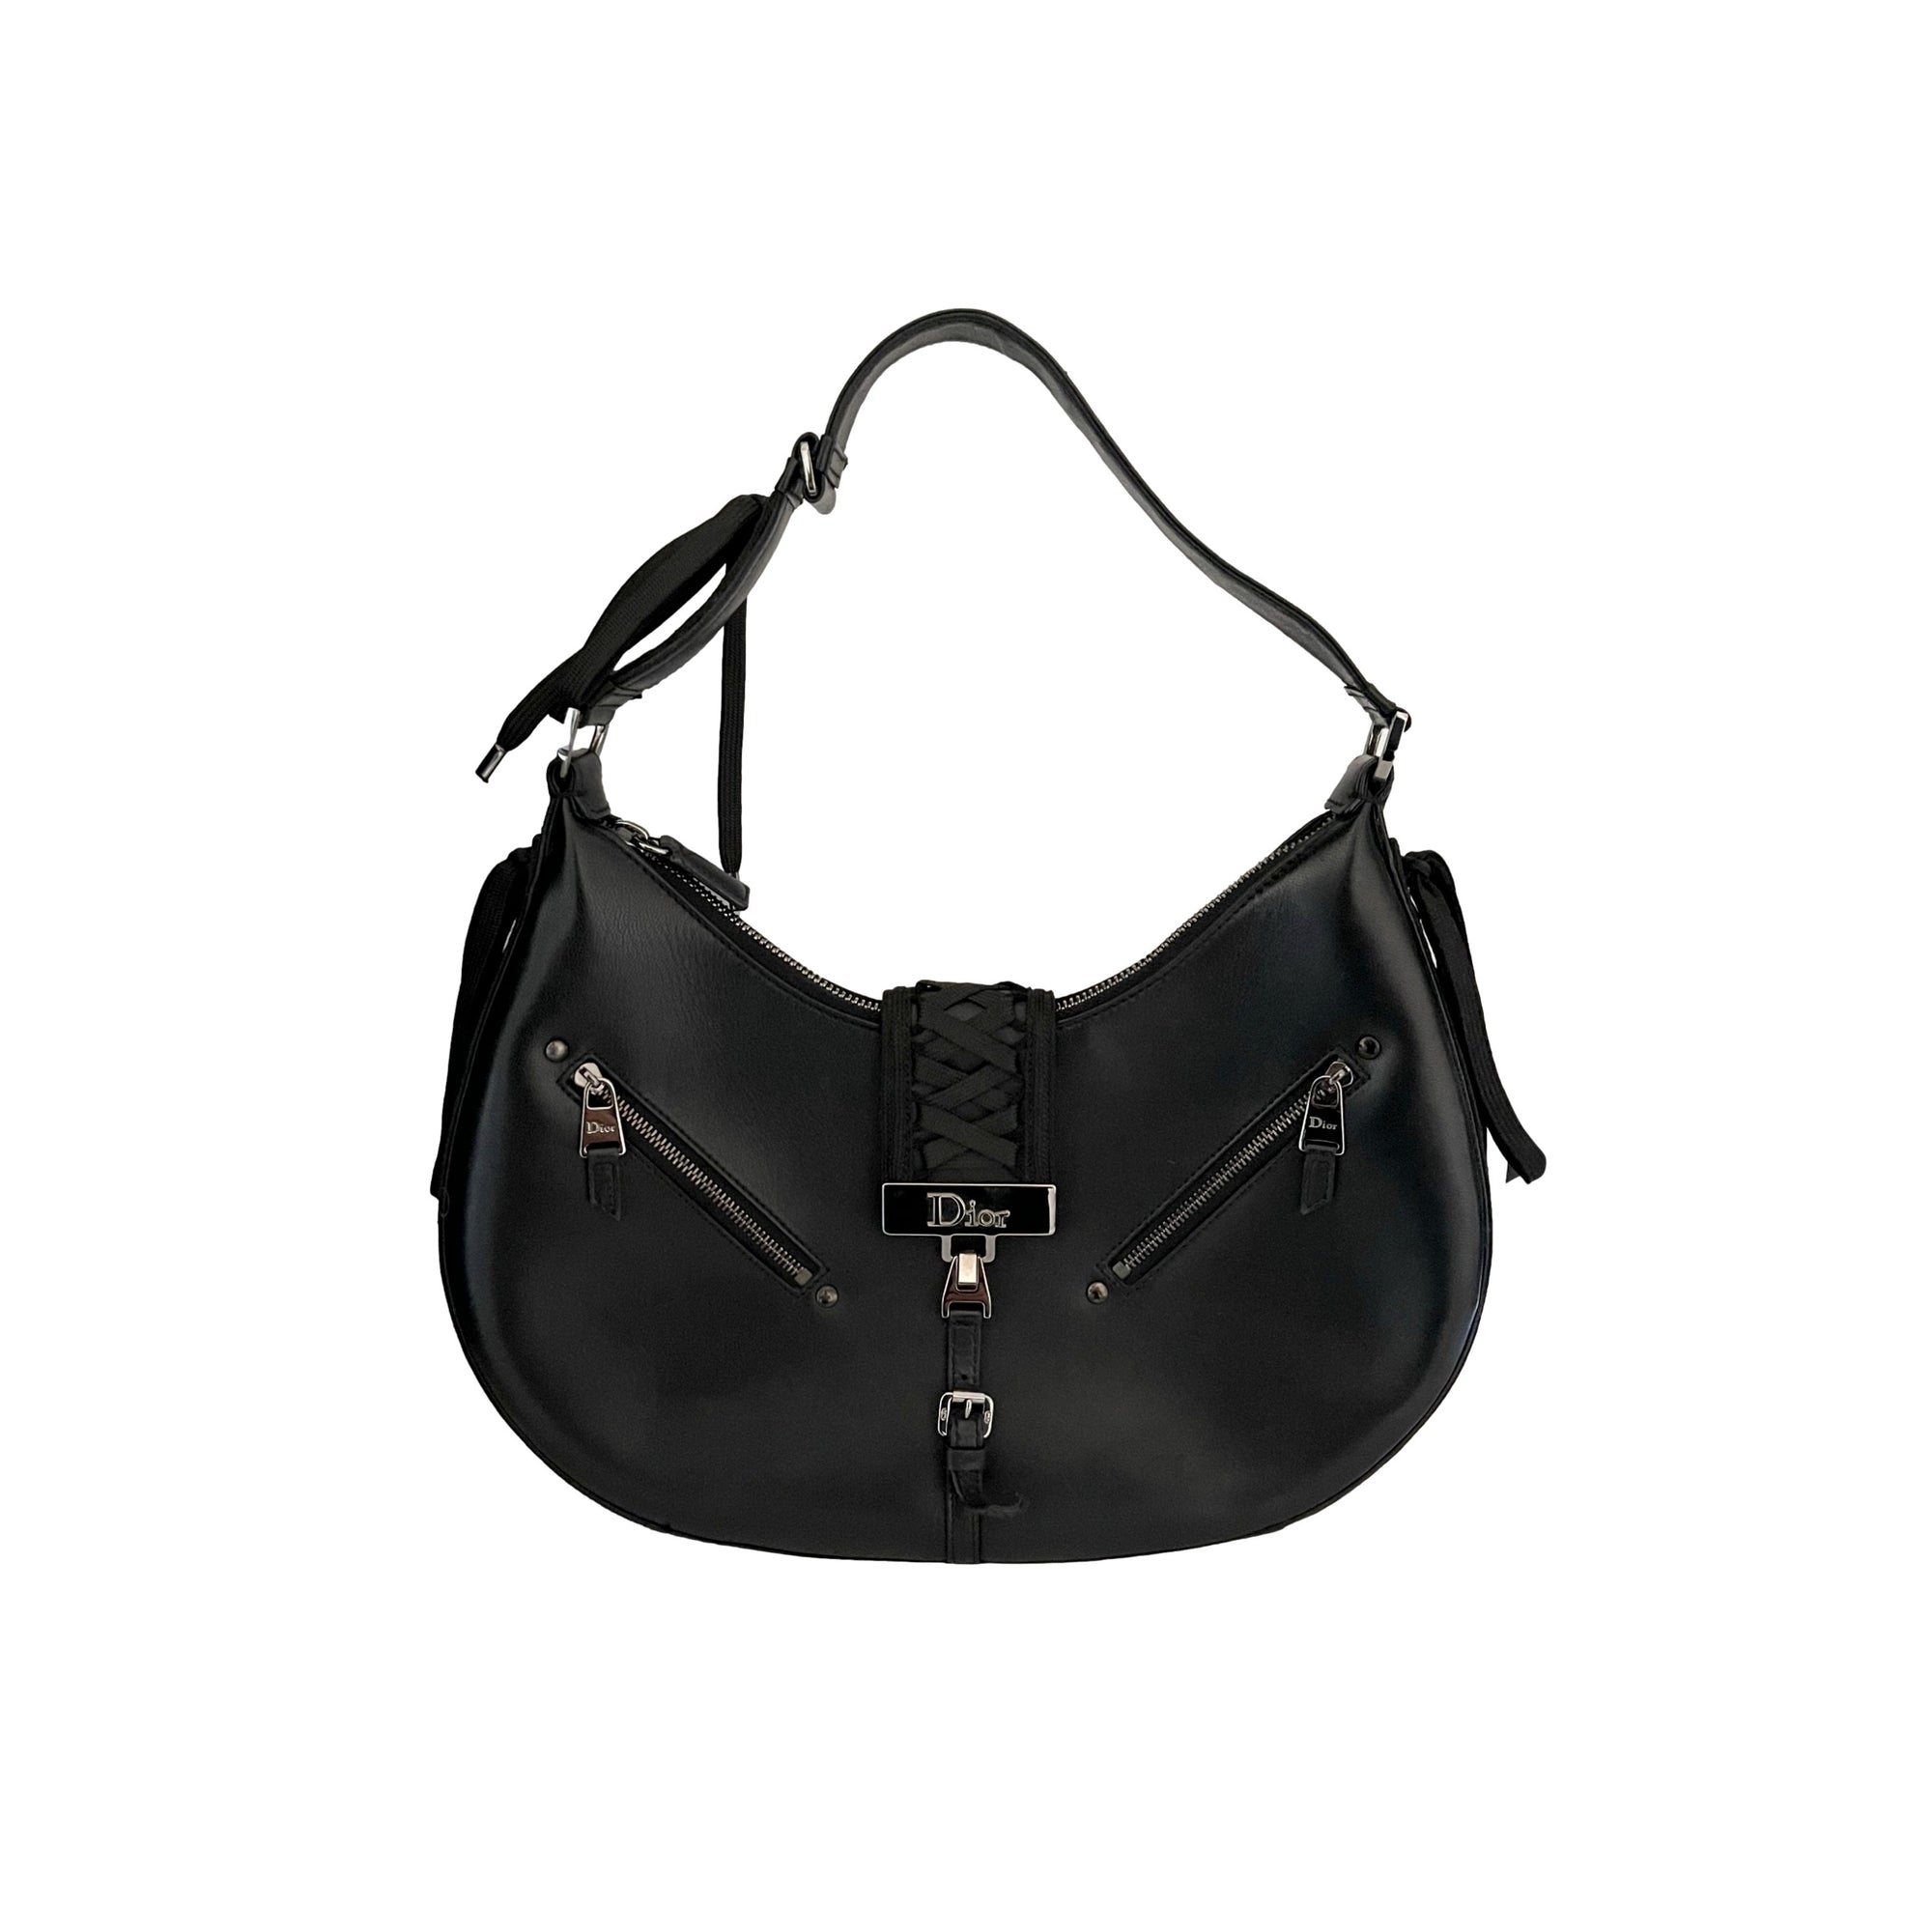 Dior Black Corset Leather Shoulder Bag - Handbags